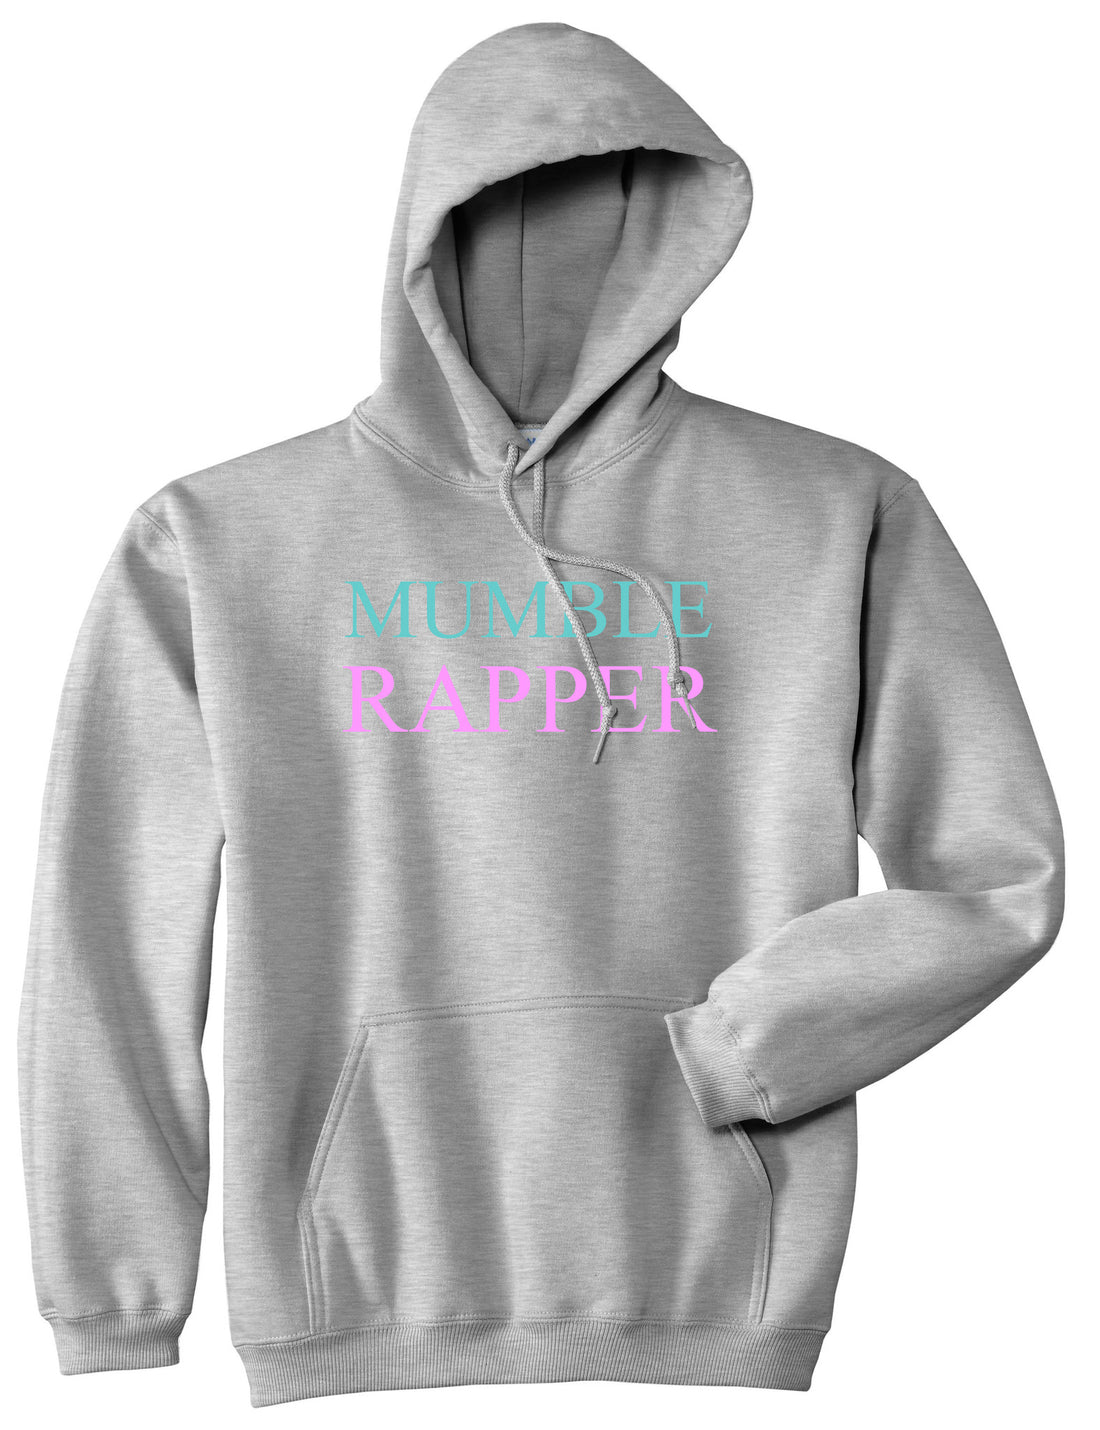 Mumble Rapper Pullover Hoodie in Grey